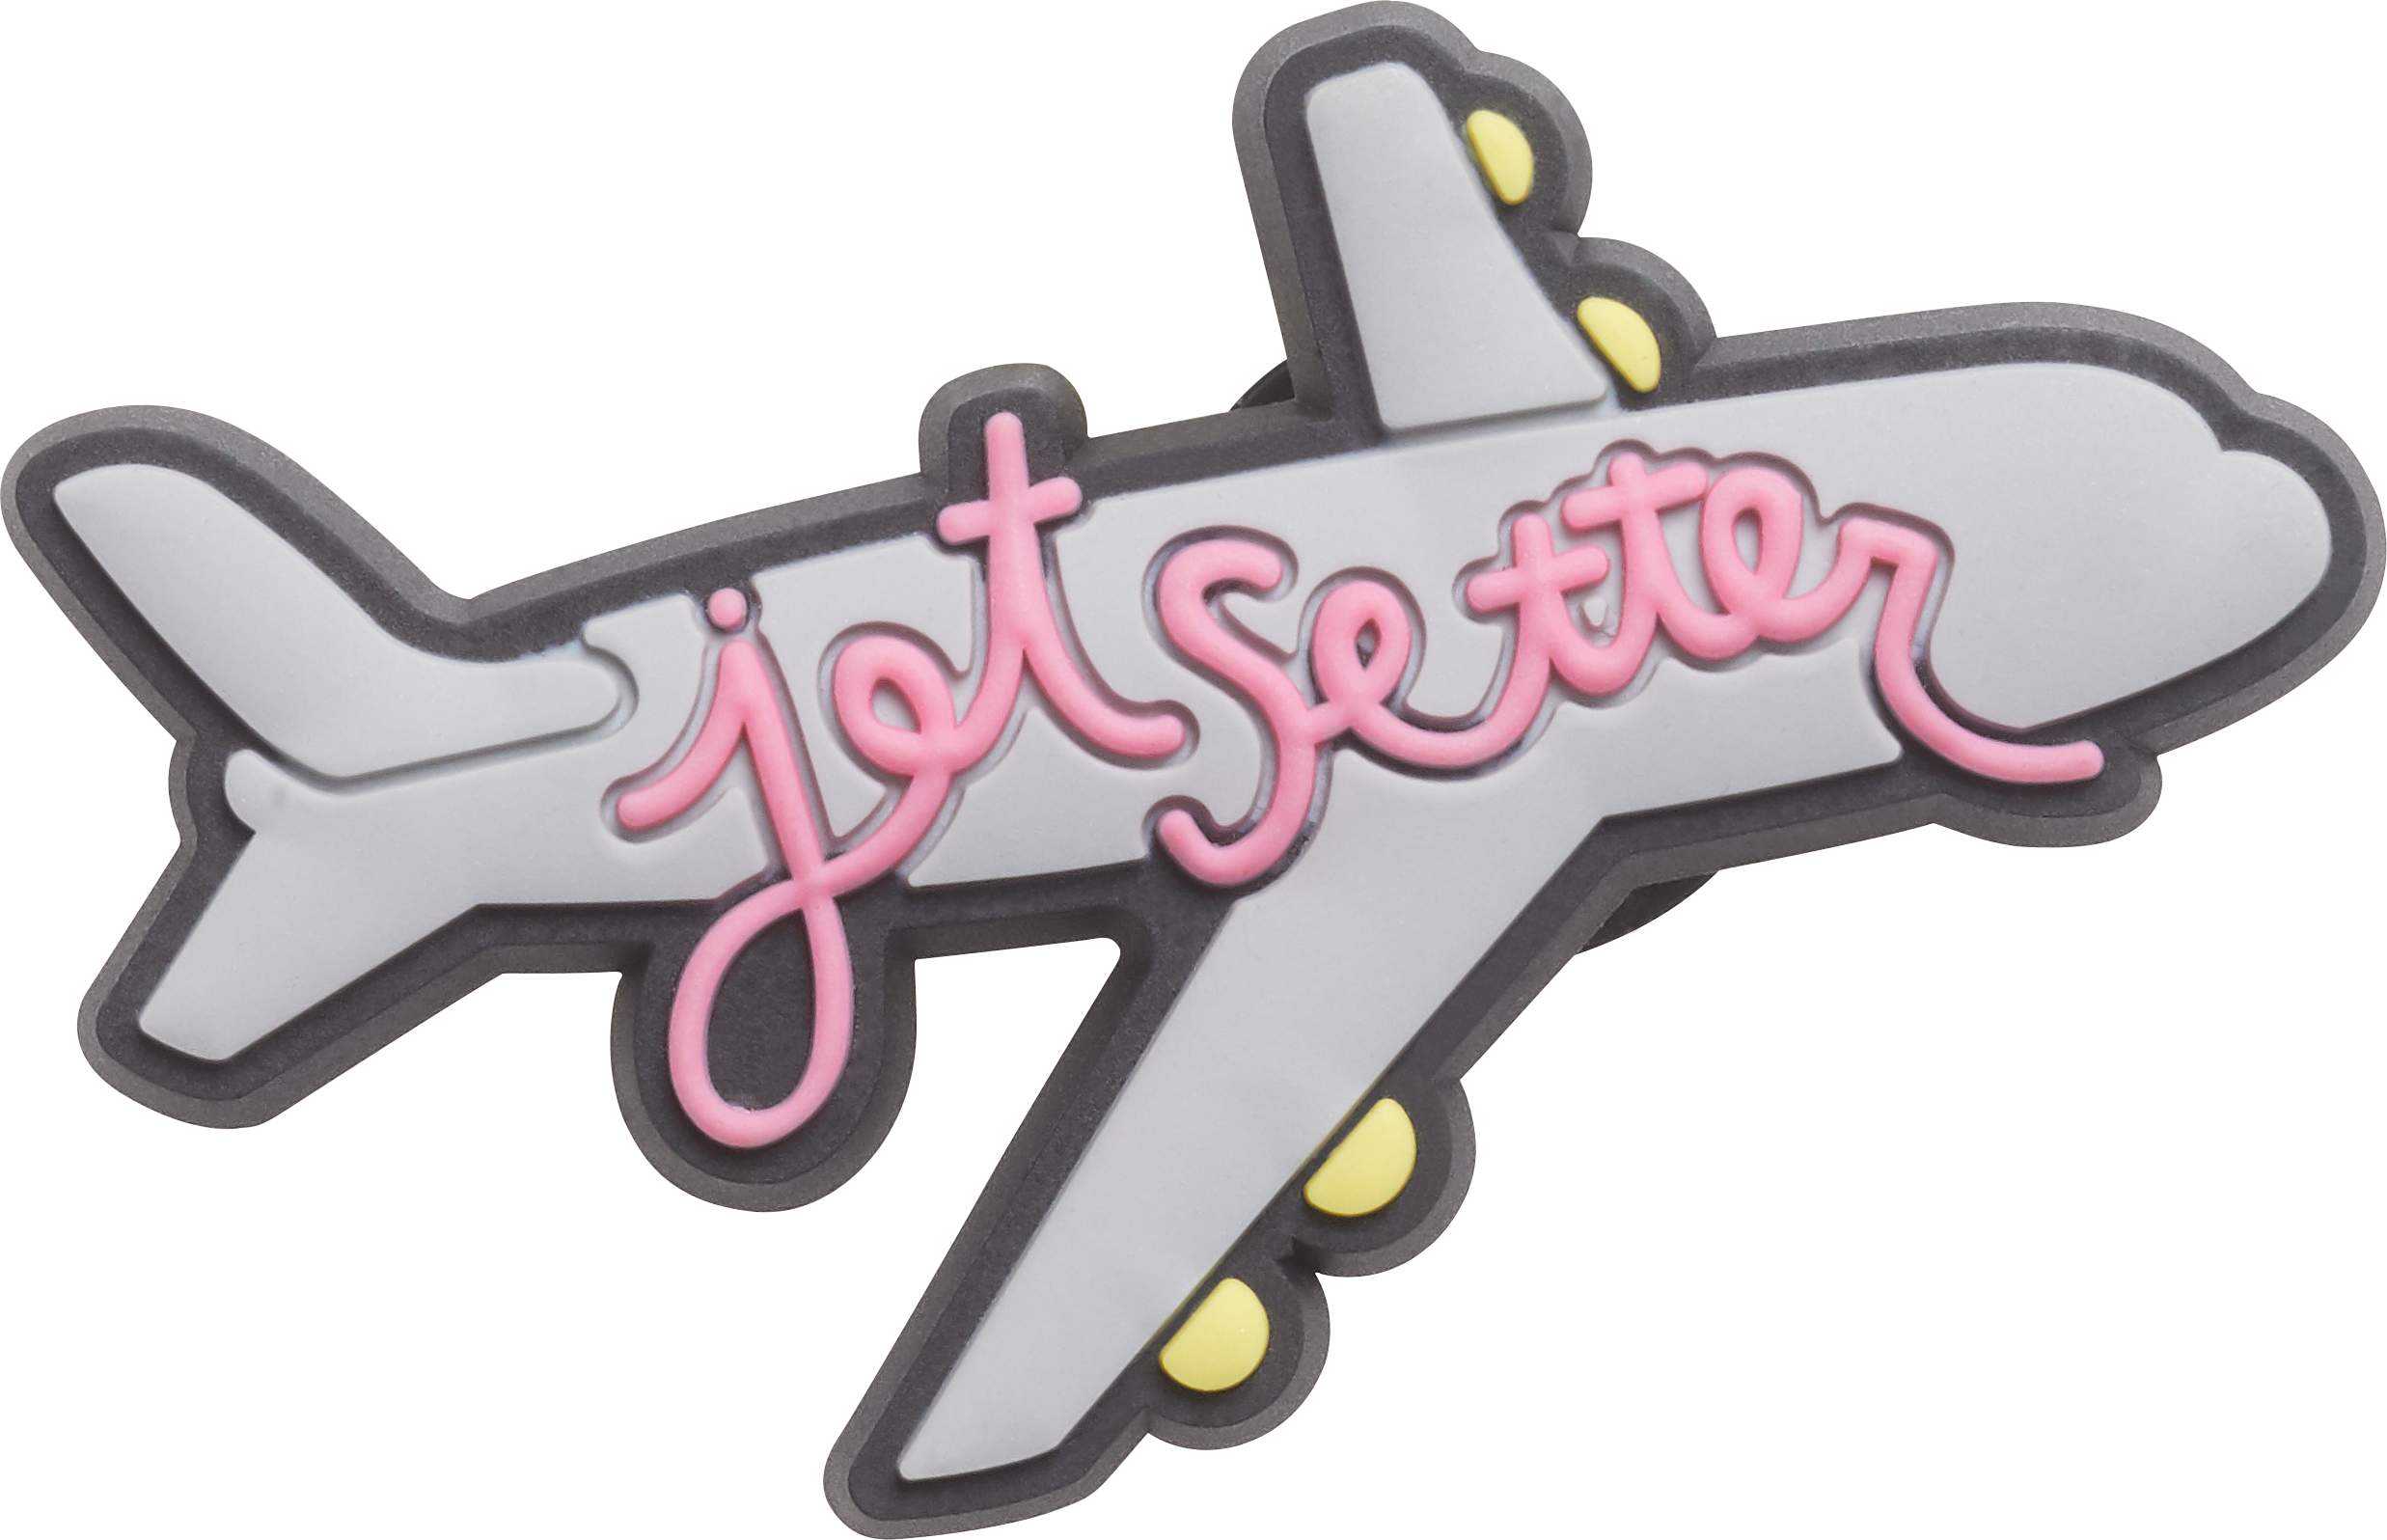 Jetsetter Plane Jibbitz Shoe Charm - Crocs